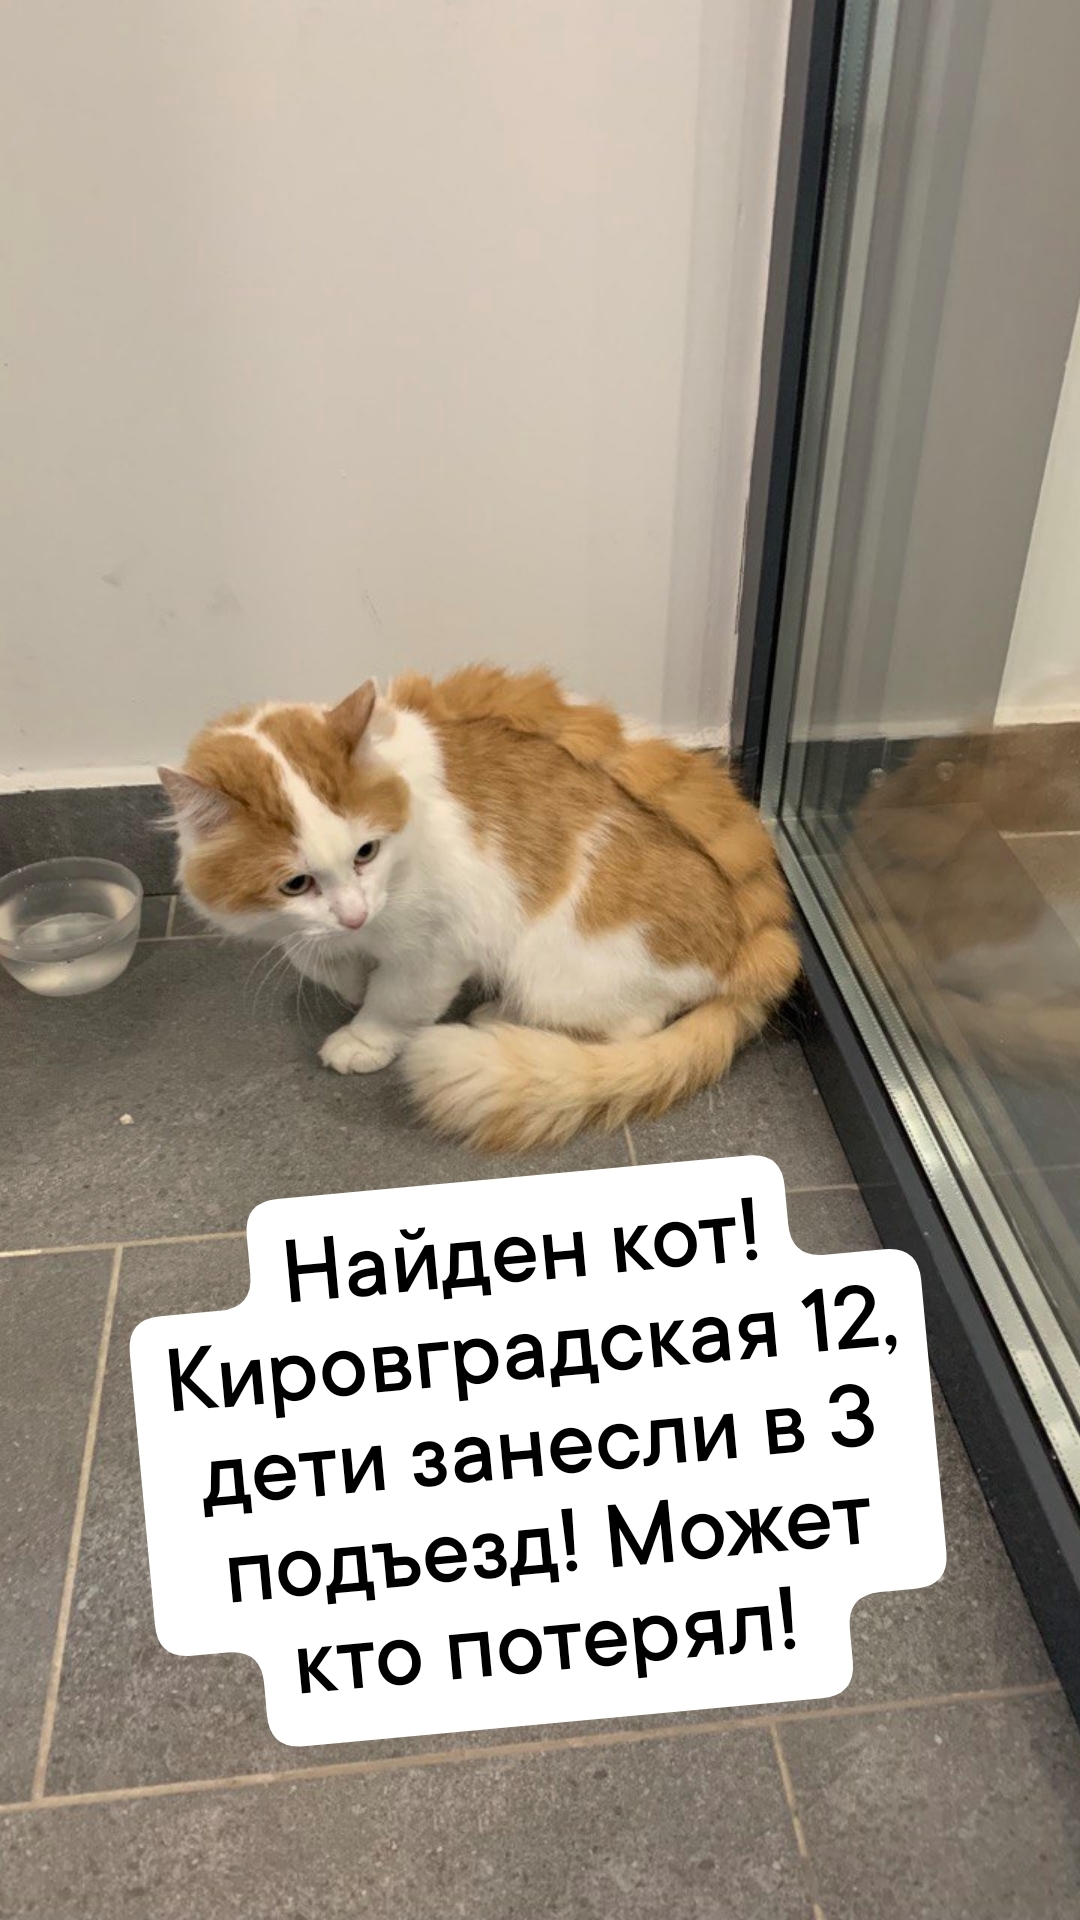 Найден рыжий котик на ул. Кировградская 12